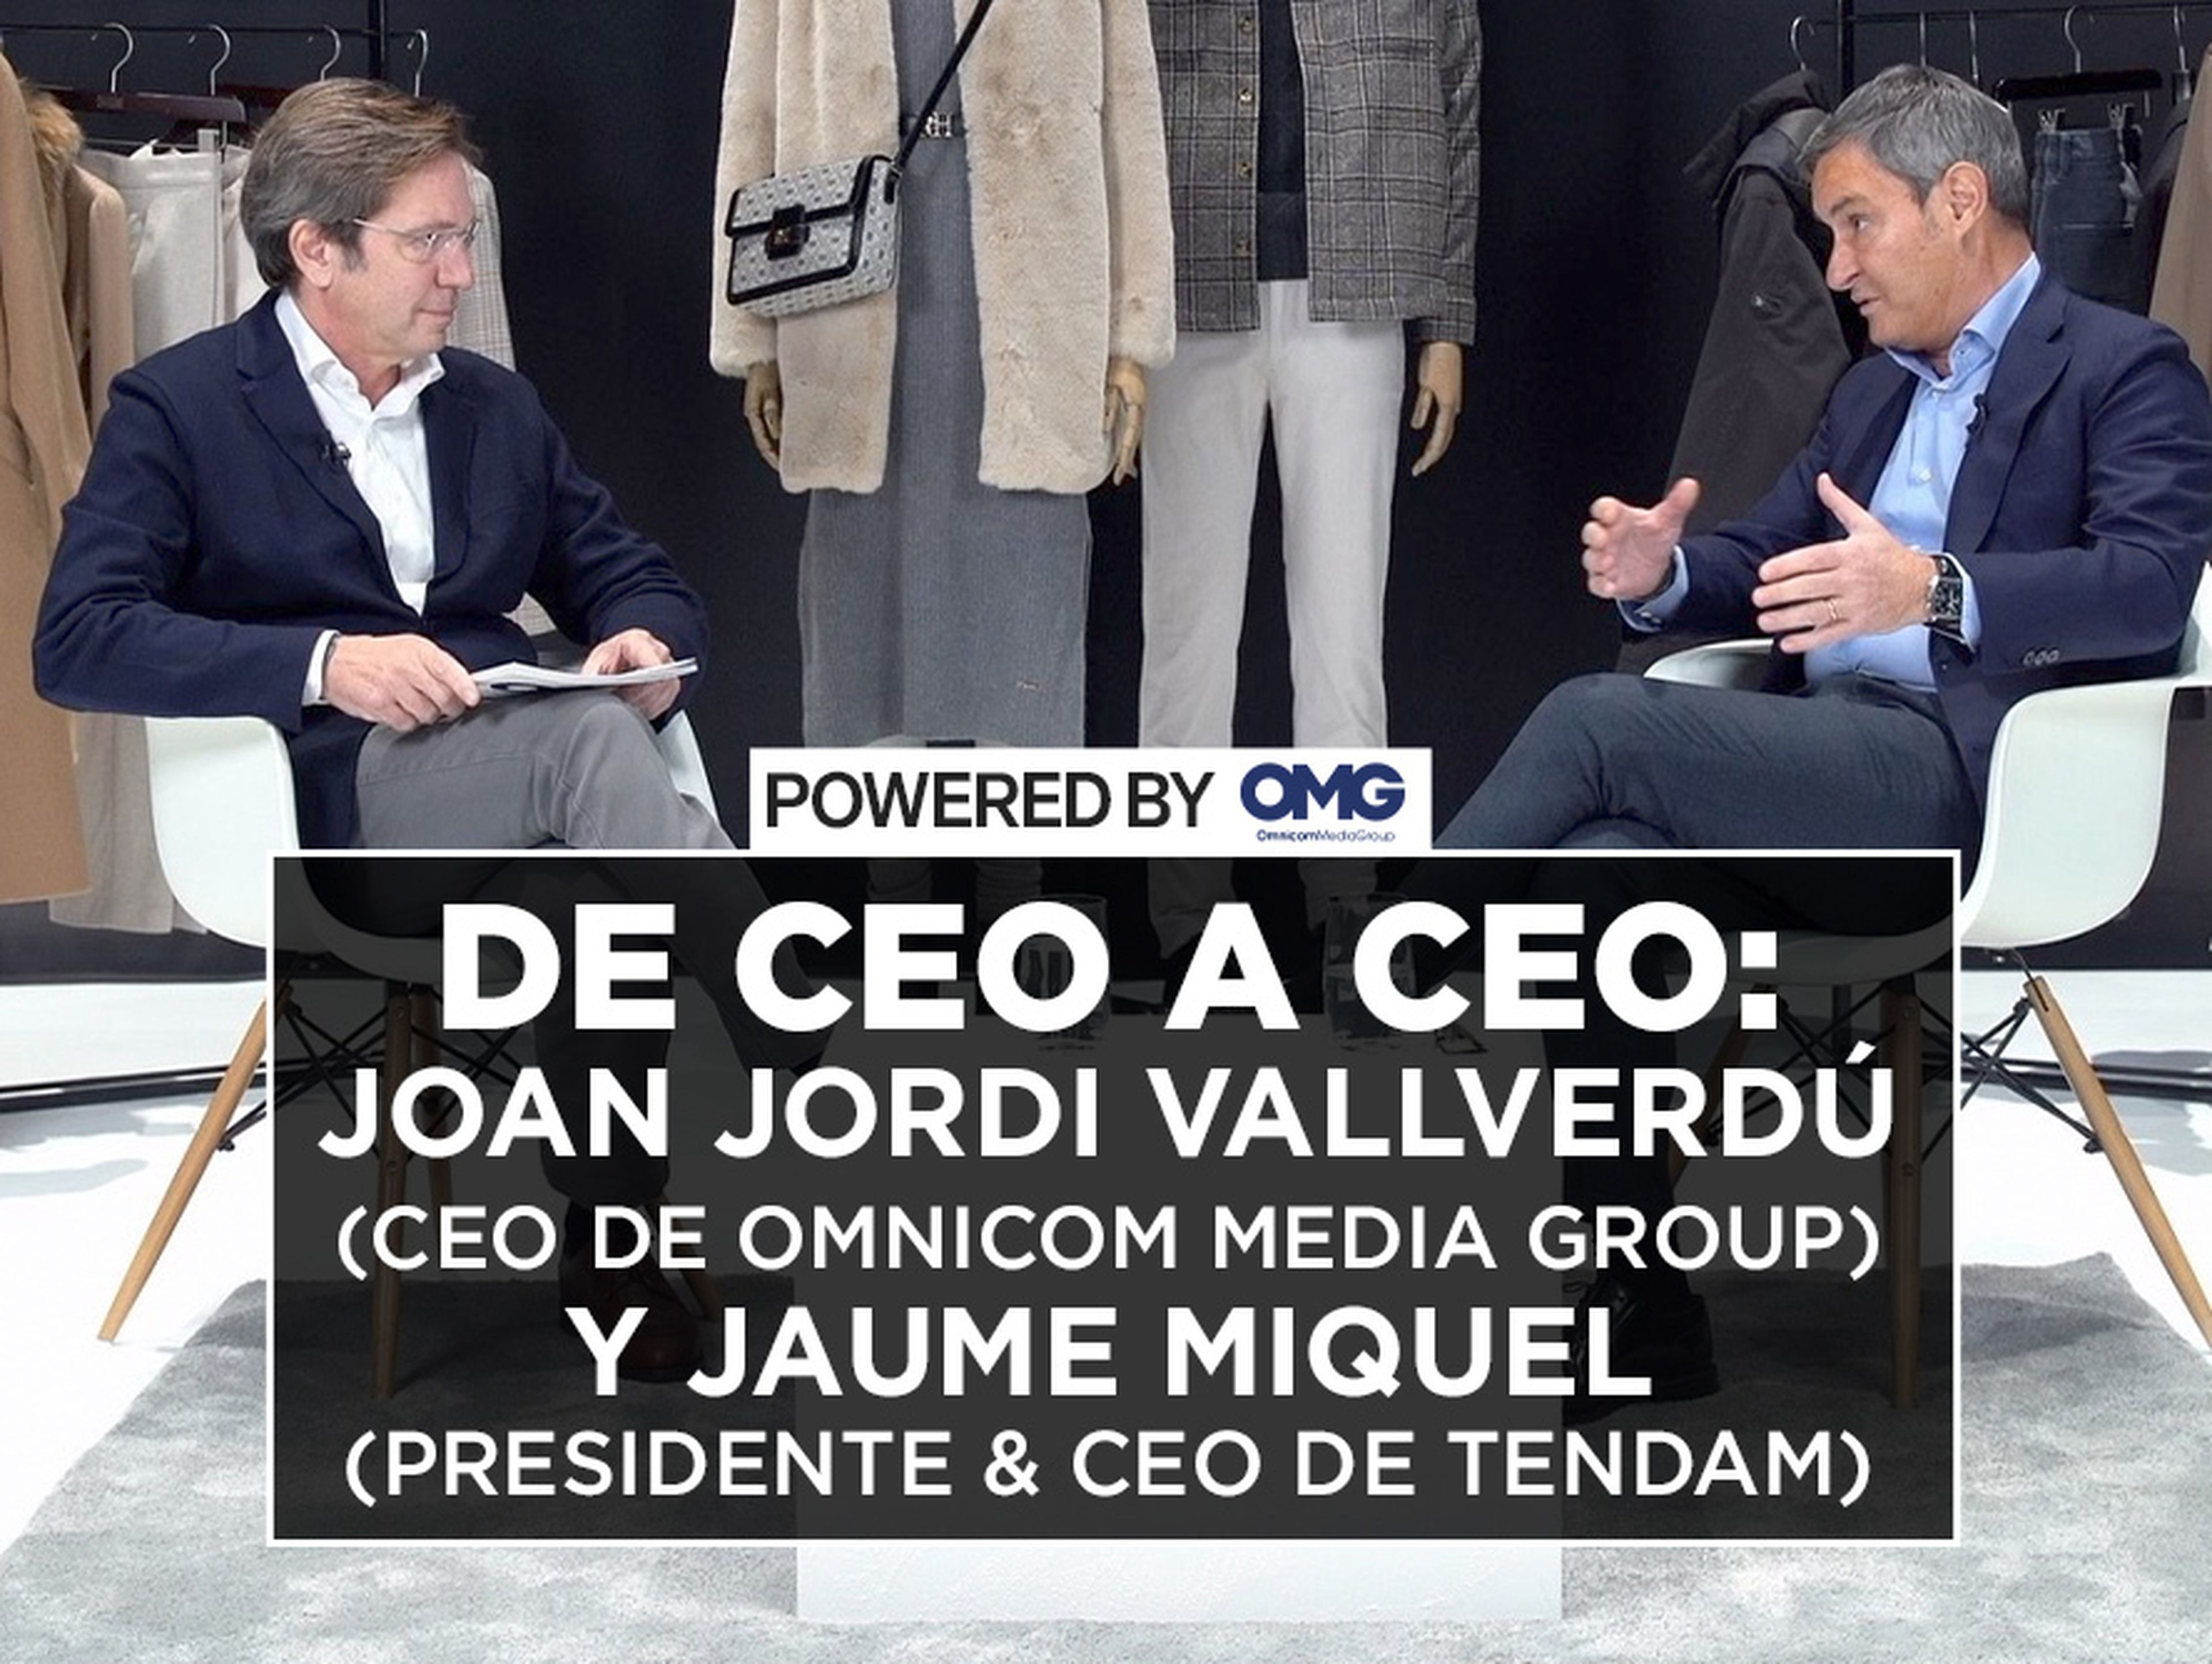 CEO A CEO - TENDAM - JAUME MIQUEL